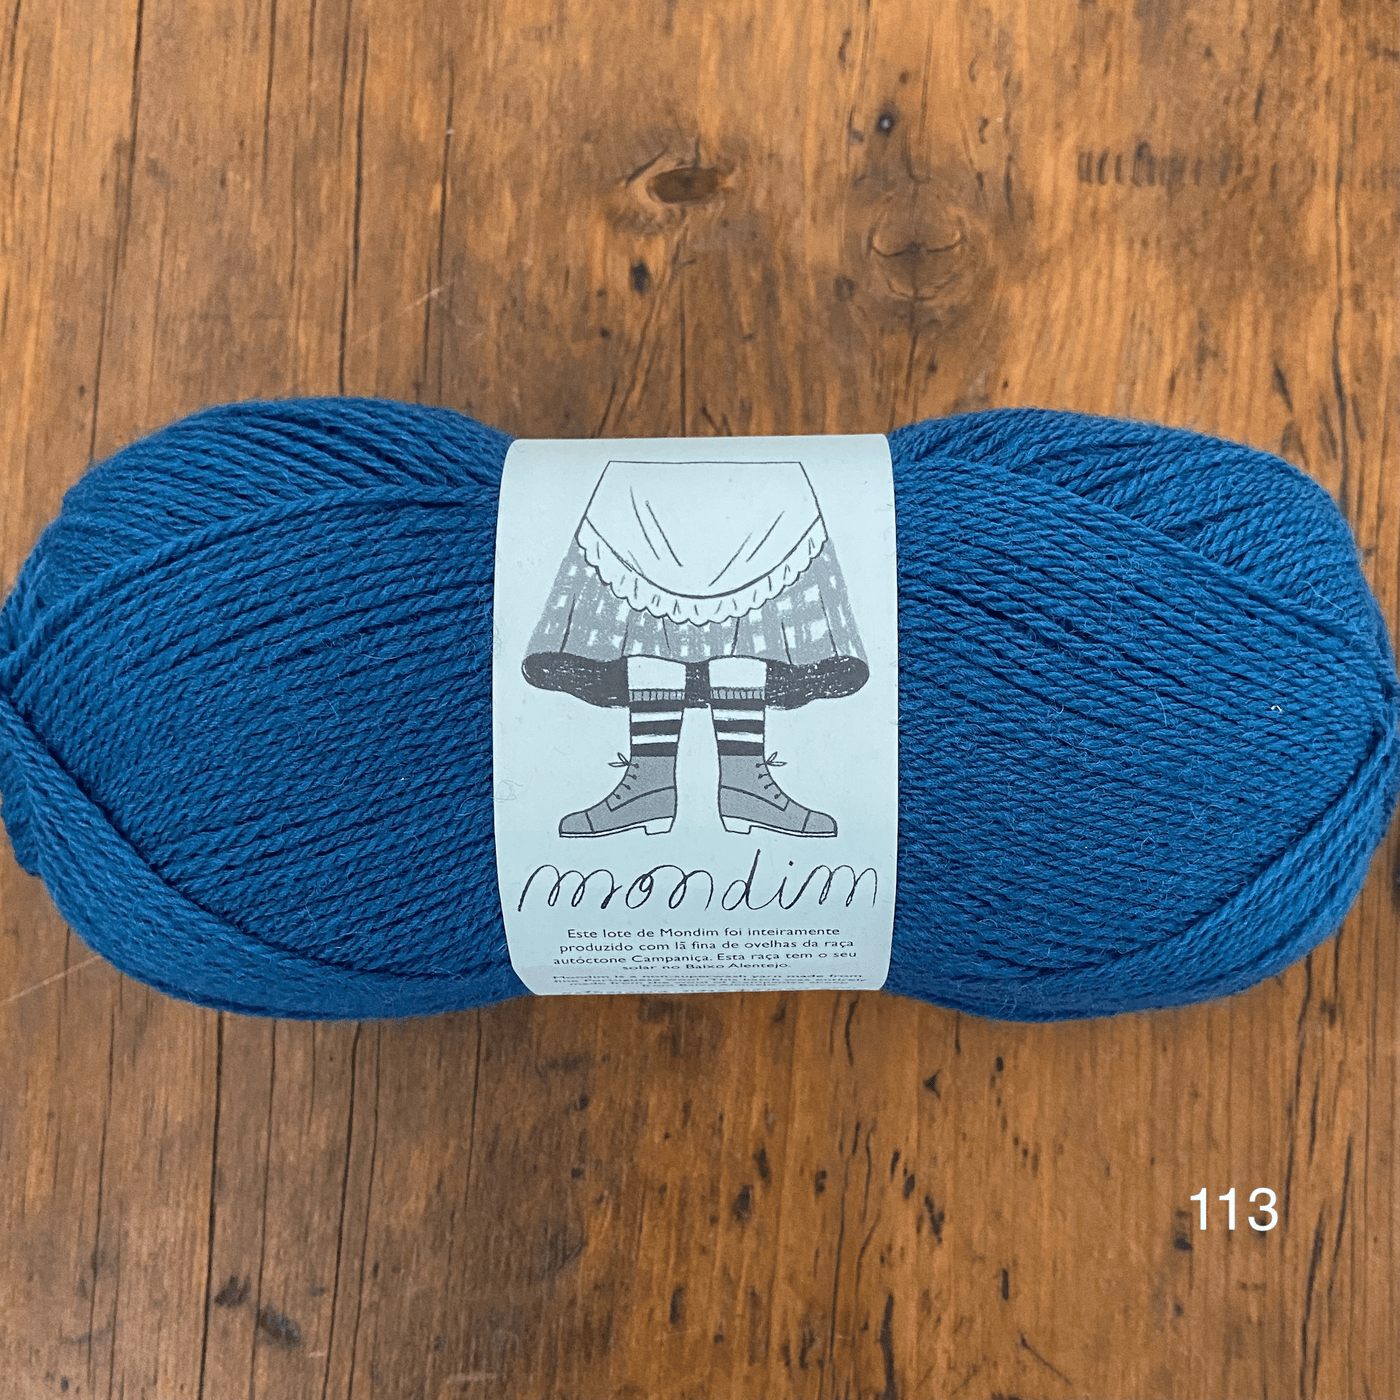 The Woolly Thistle Retrosaria Mondim Fingering Weight Yarn in 113 (blue)